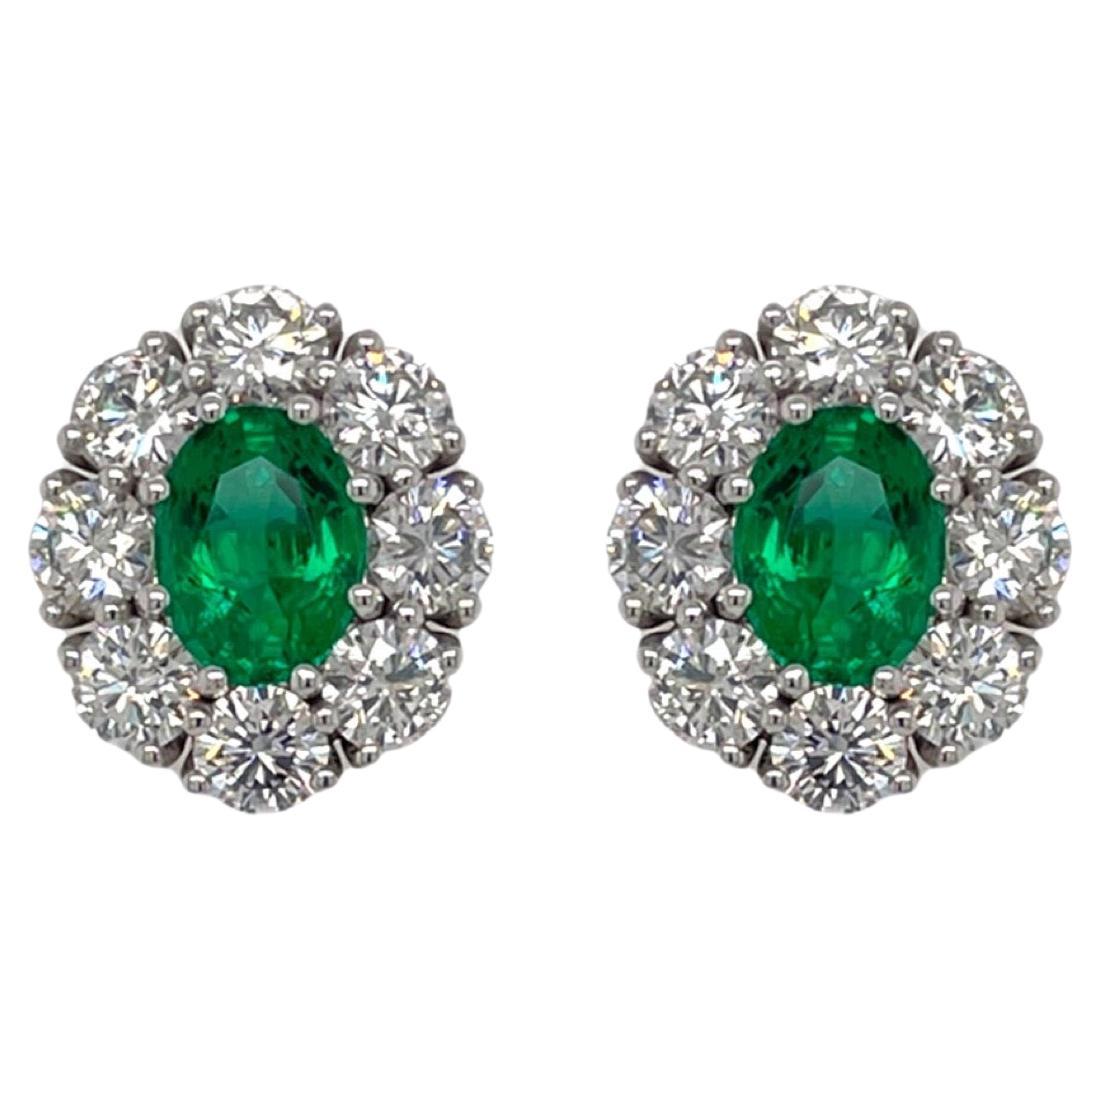 Oval Emerald & Diamond Cluster Earring